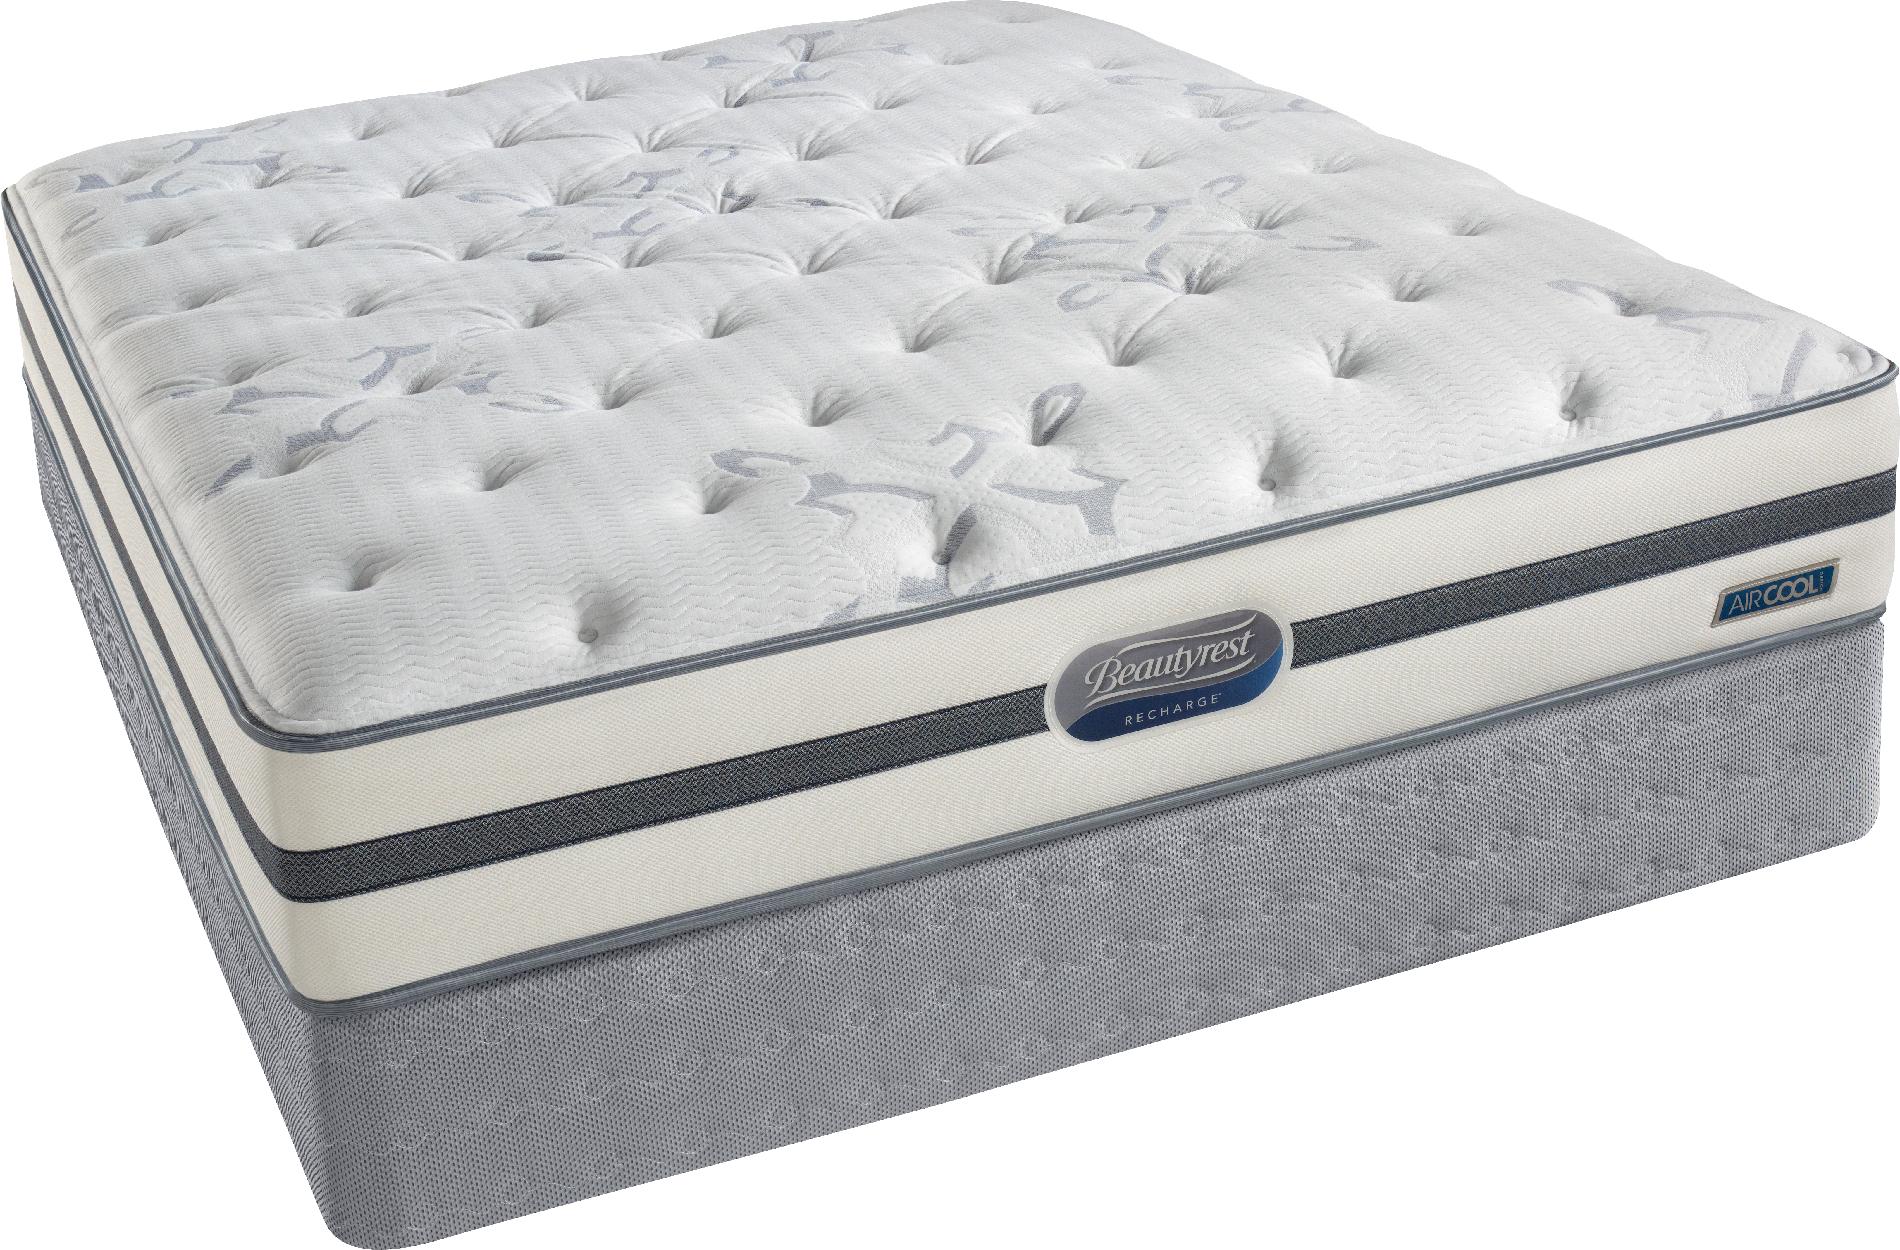 sears beautyrest mattress sale